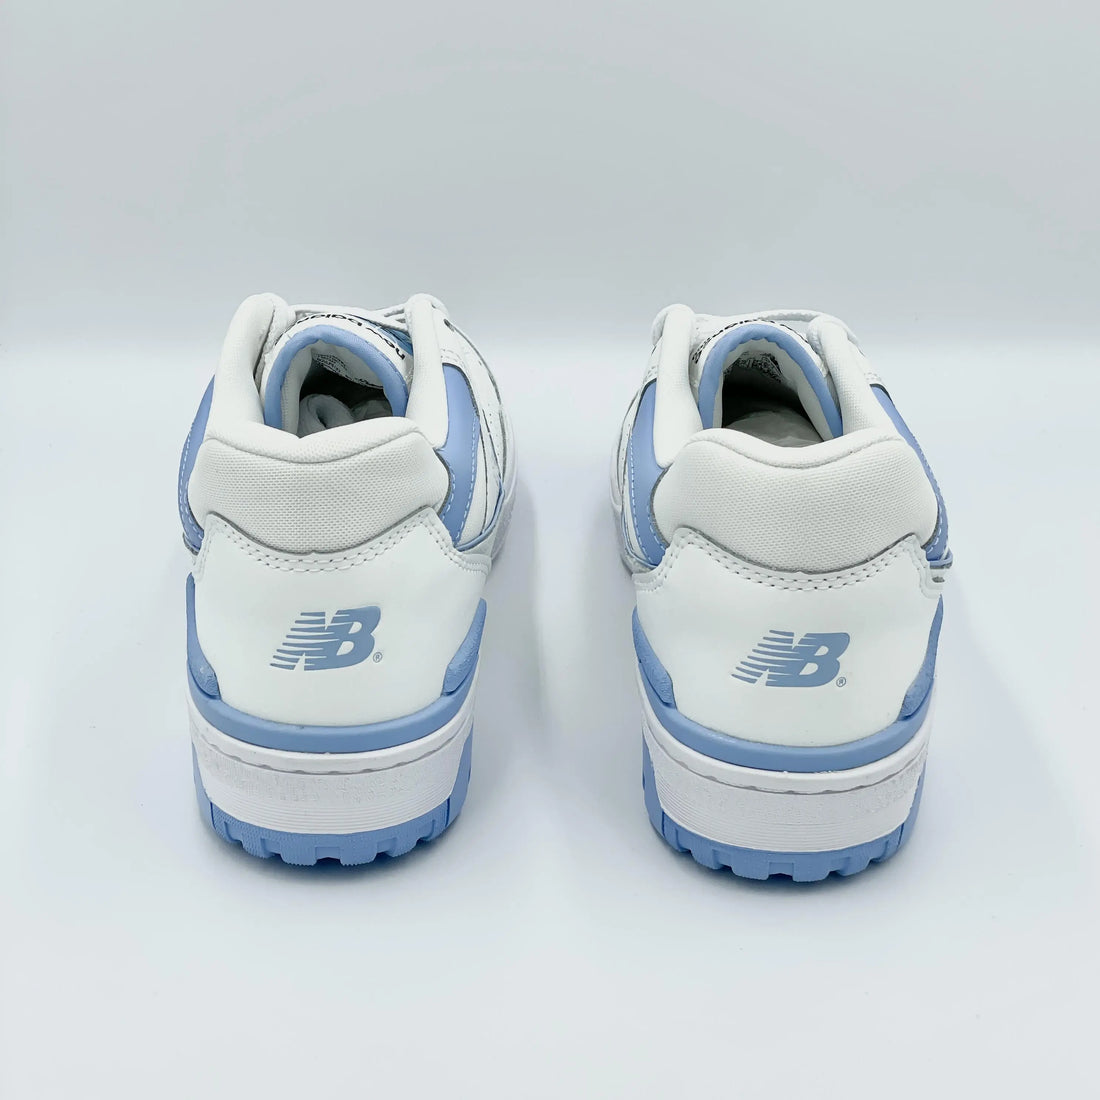 New Balance 550 UNC White Dusk Blue (W)  SA Sneakers